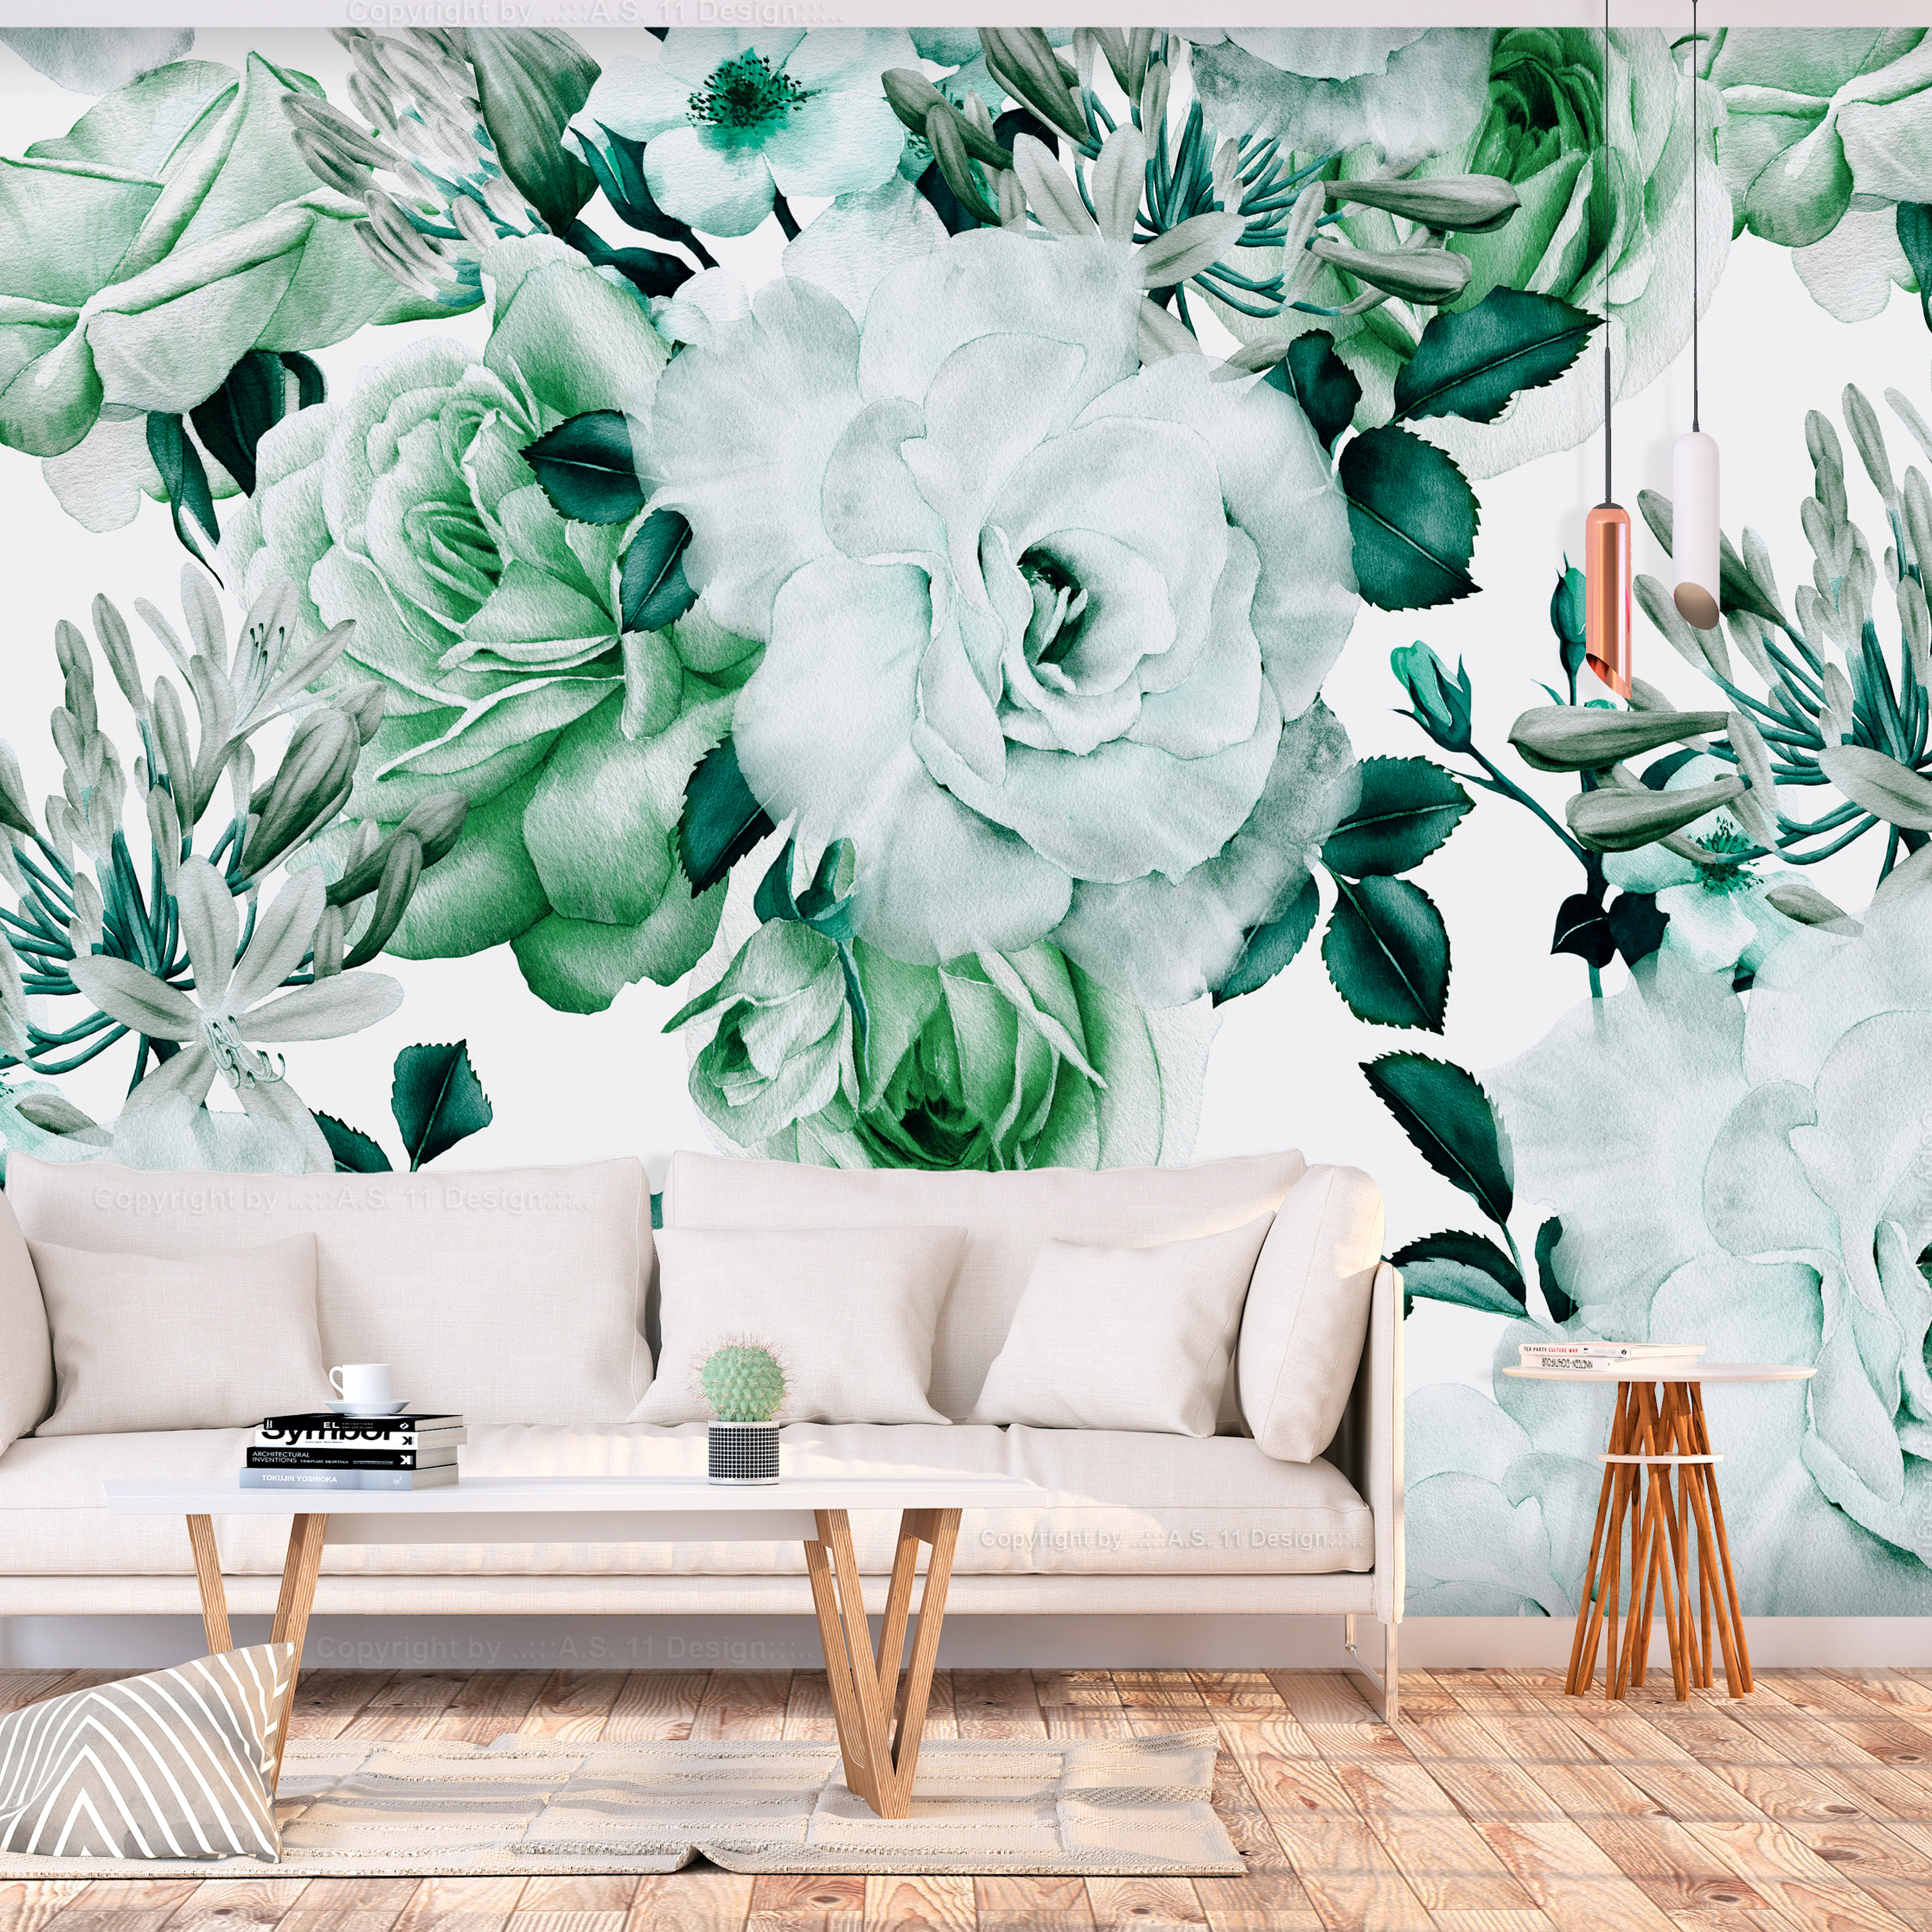 Self-adhesive Wallpaper - Sentimental Garden (Green) - 343x245